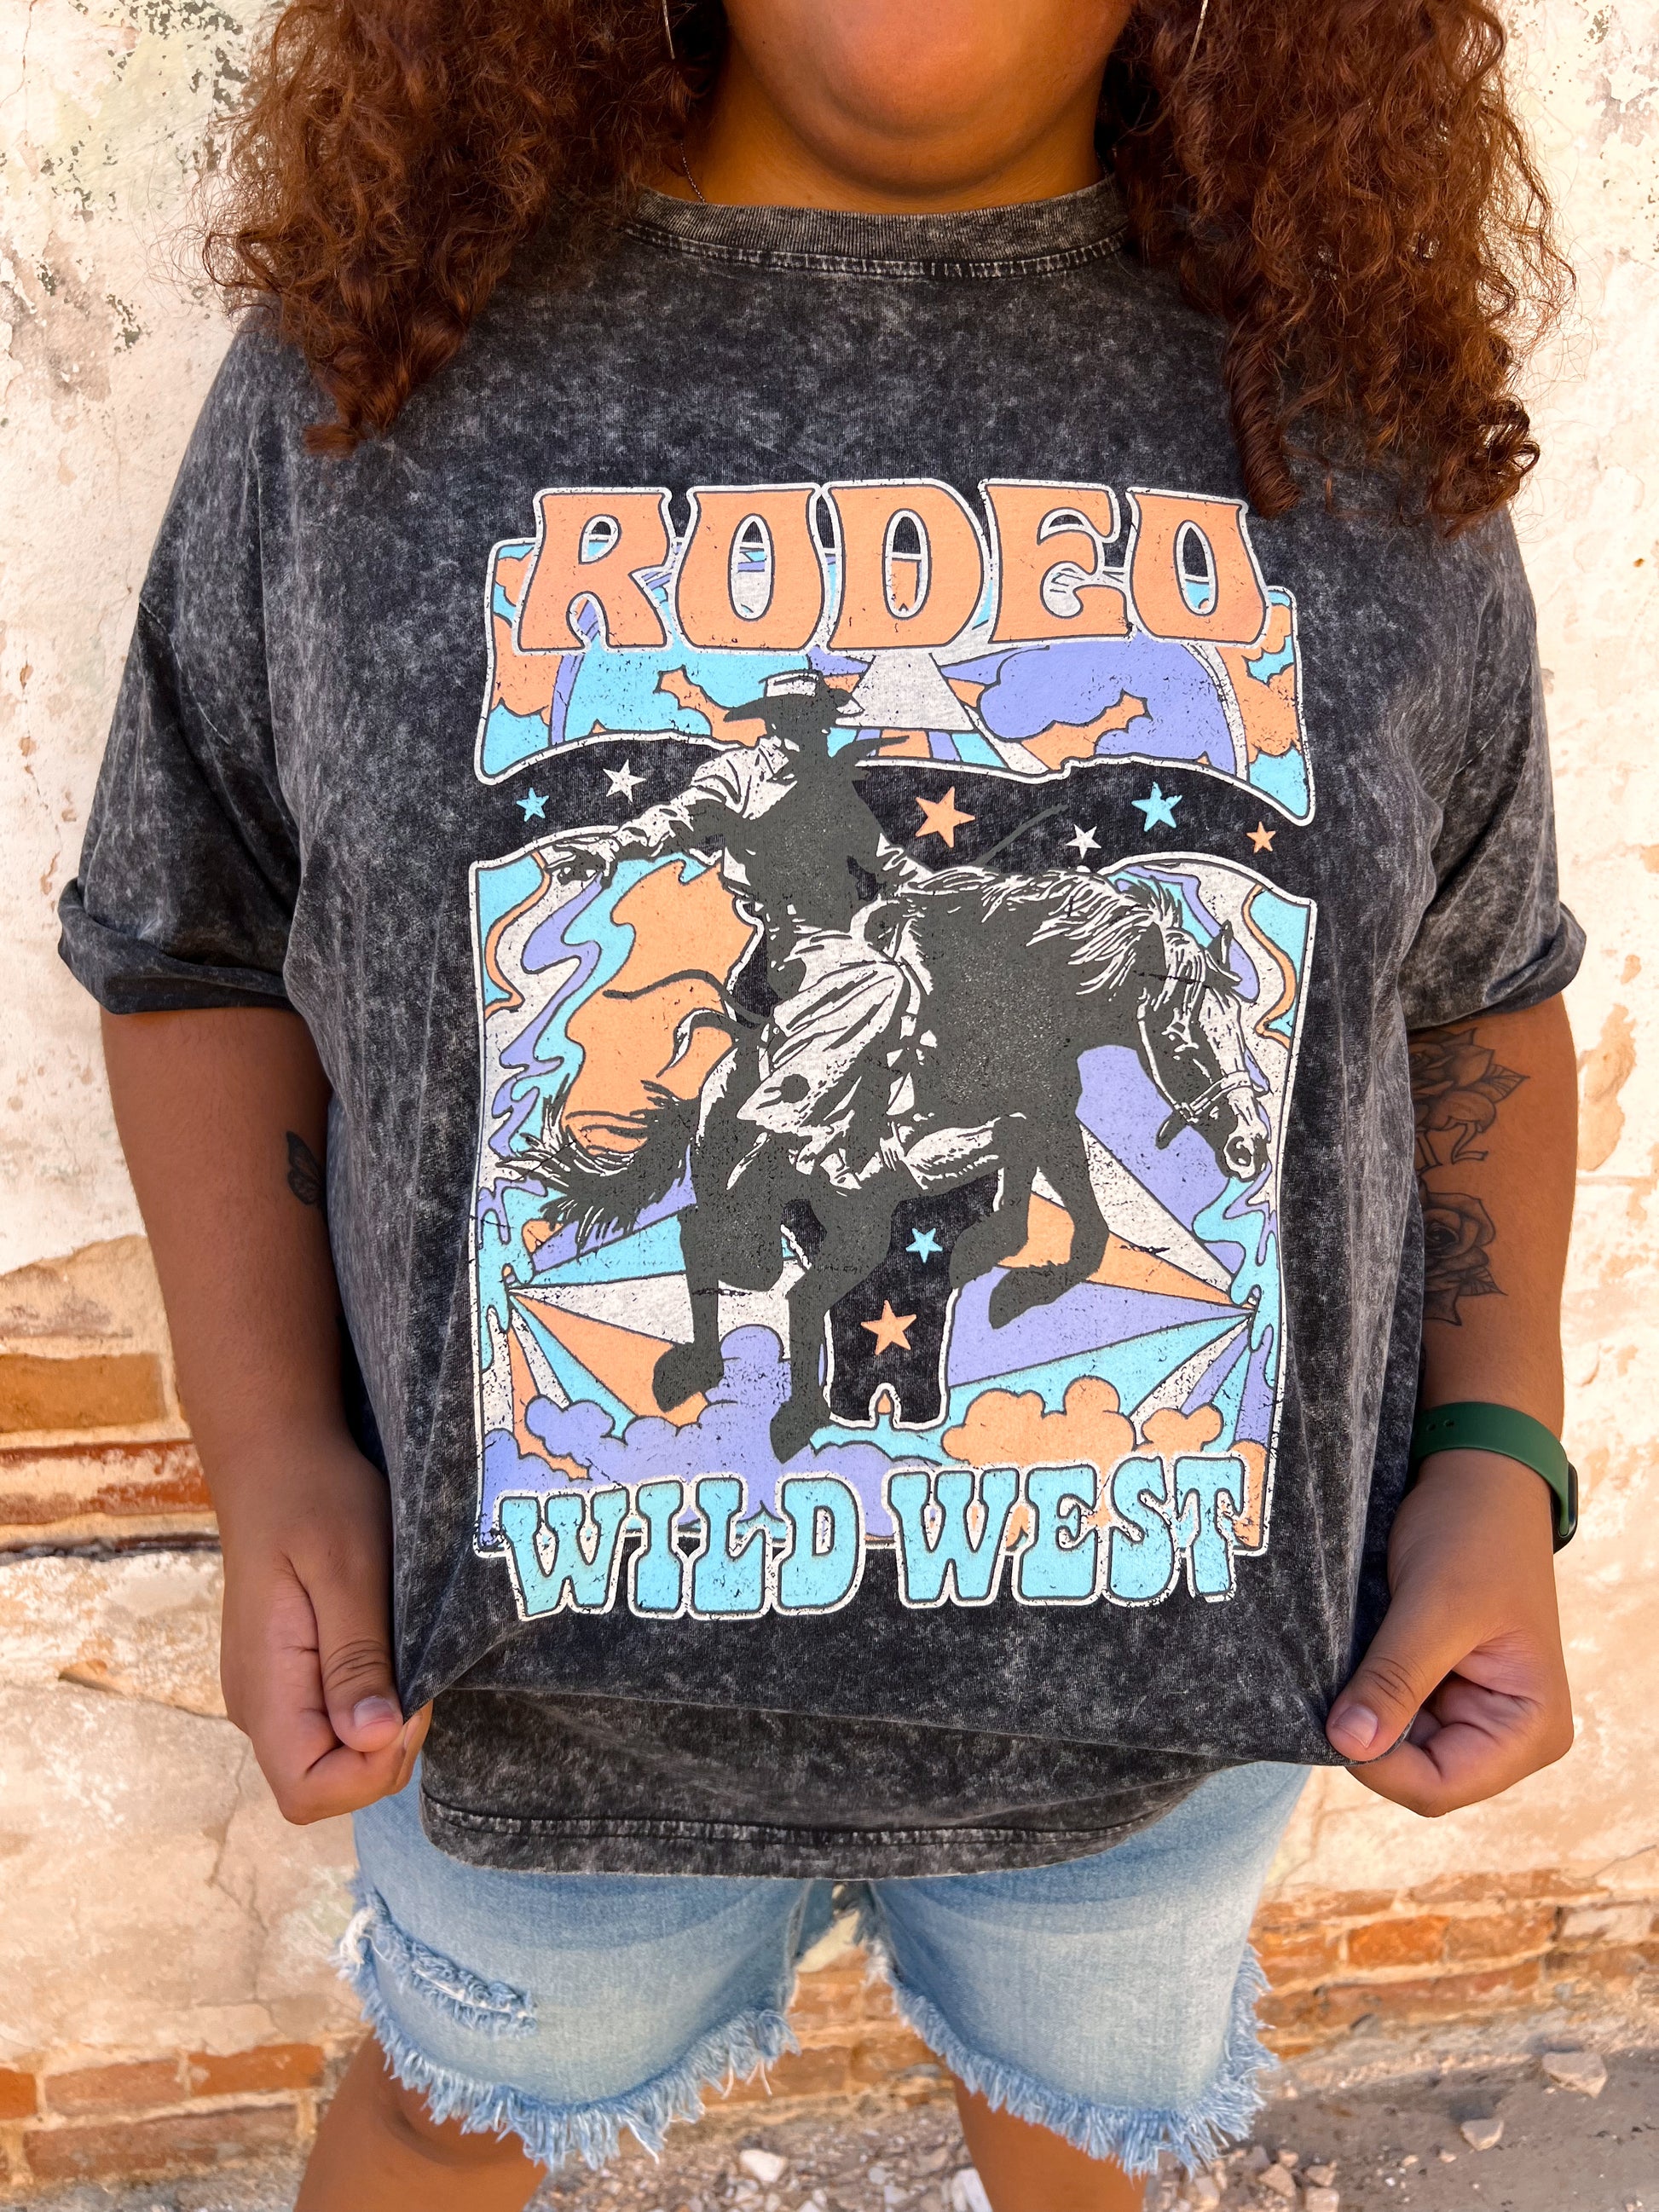 Rodeo Wild West Rocker Tee - Plus-Rocker Tee-Zutter-1st md, FAVES, K7777-2009, Max Retail, md 7/30, SH13535-The Twisted Chandelier